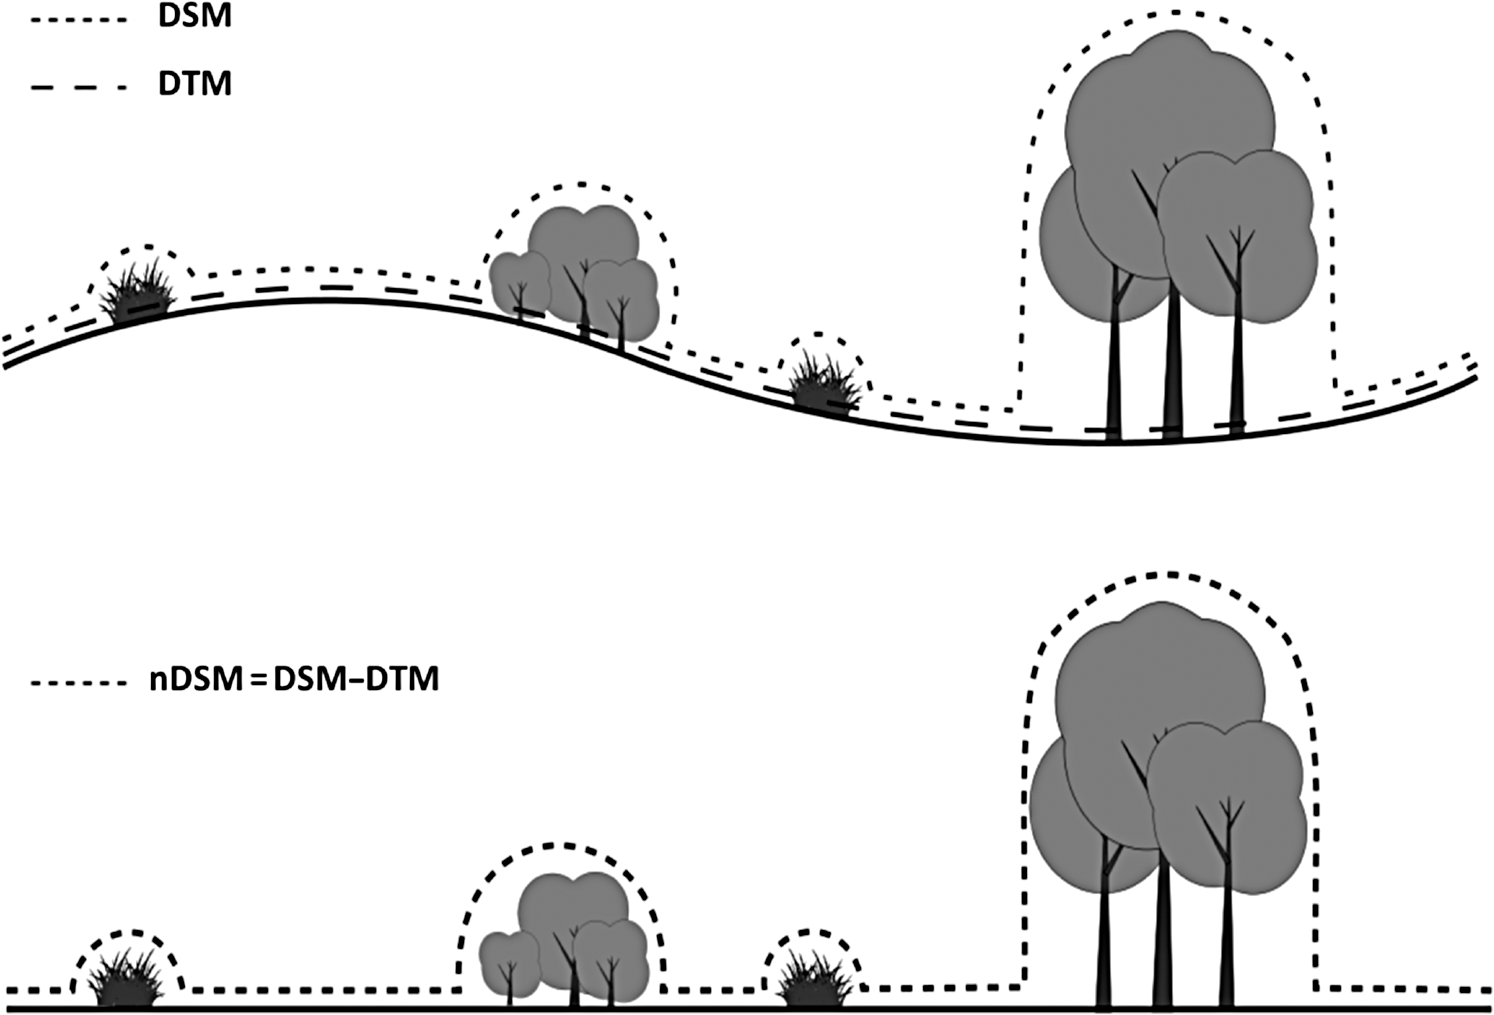 dsm digital terrain model